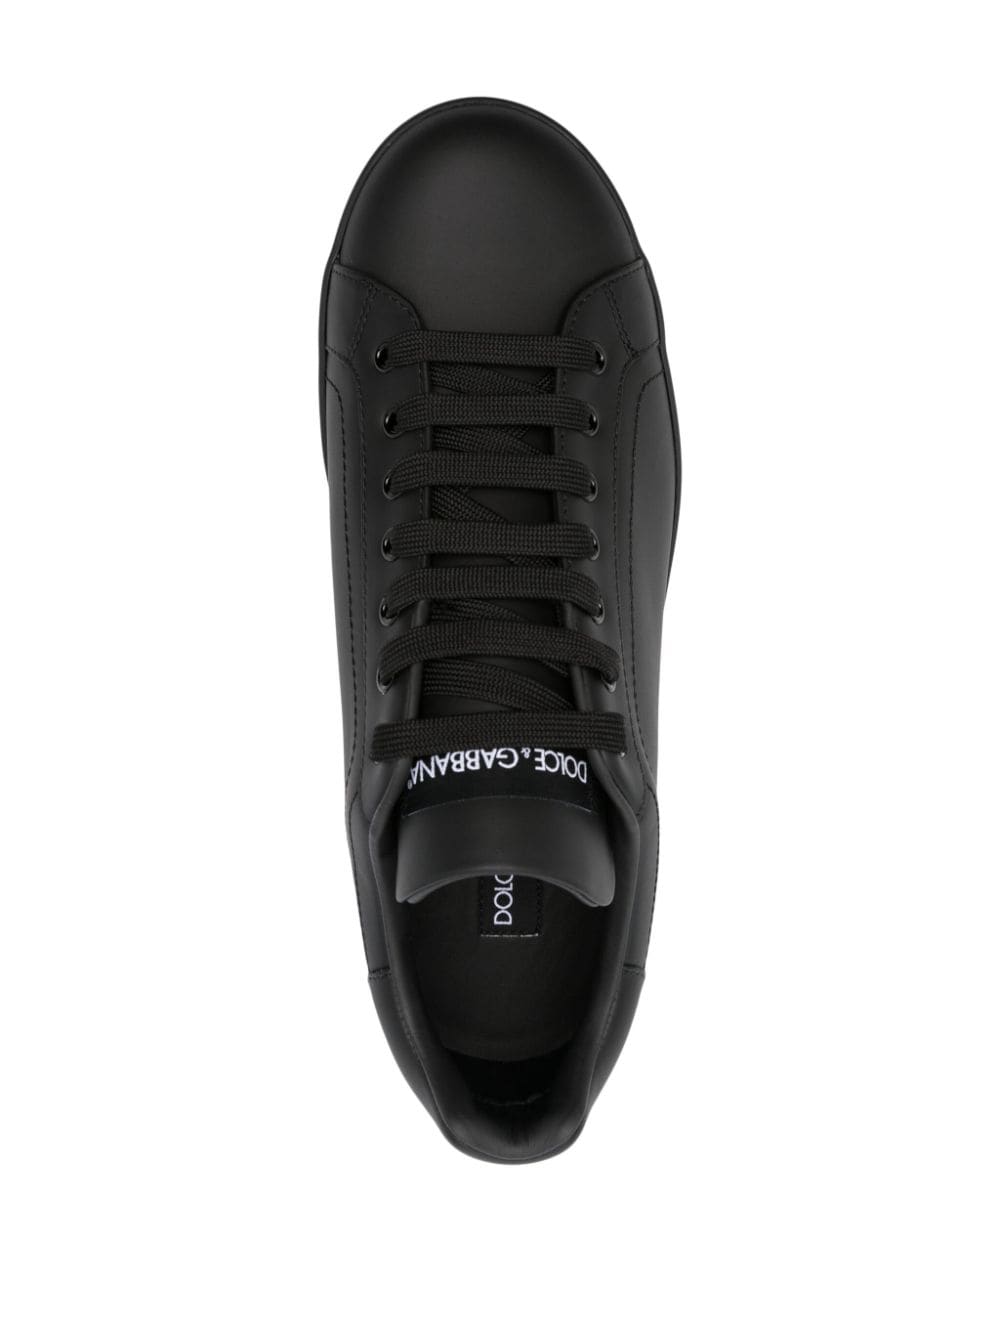 Dolce & Gabbana Sneakers Black